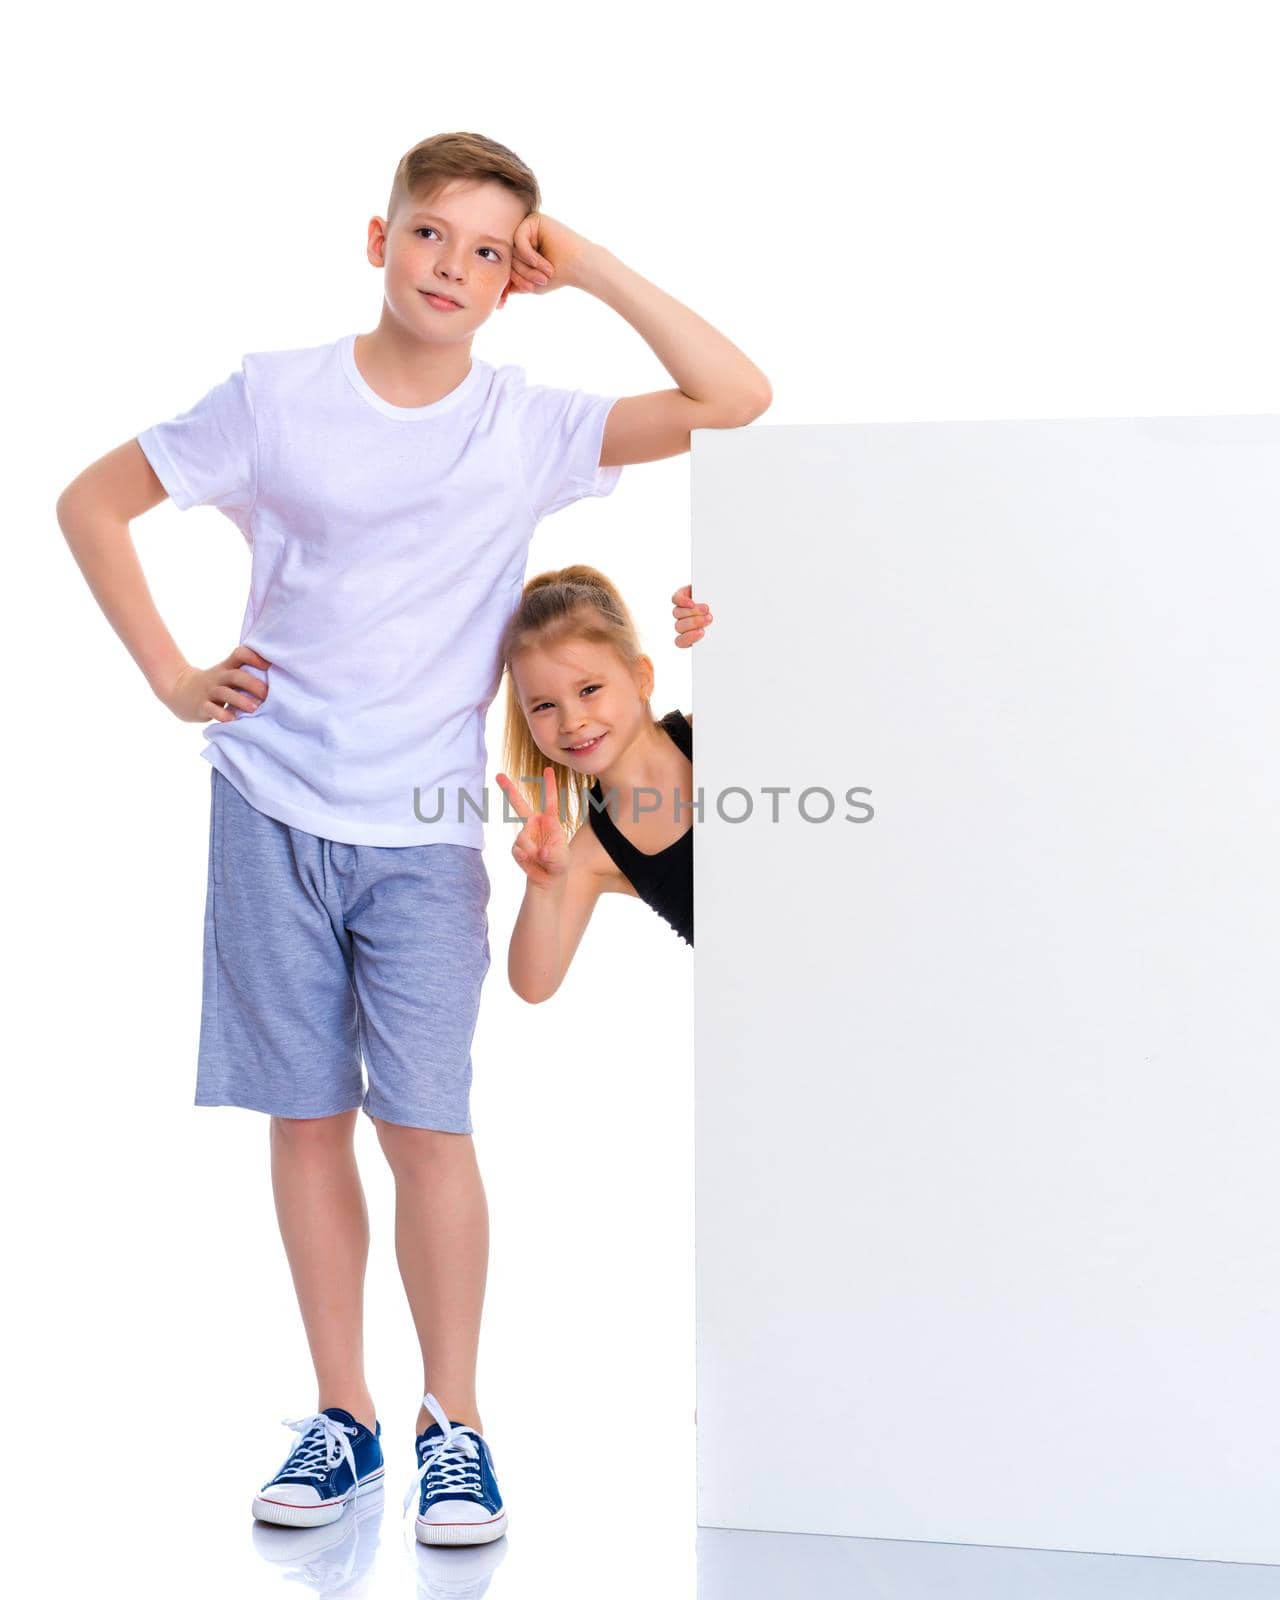 A boy and a girl near an advertising white banner. by kolesnikov_studio